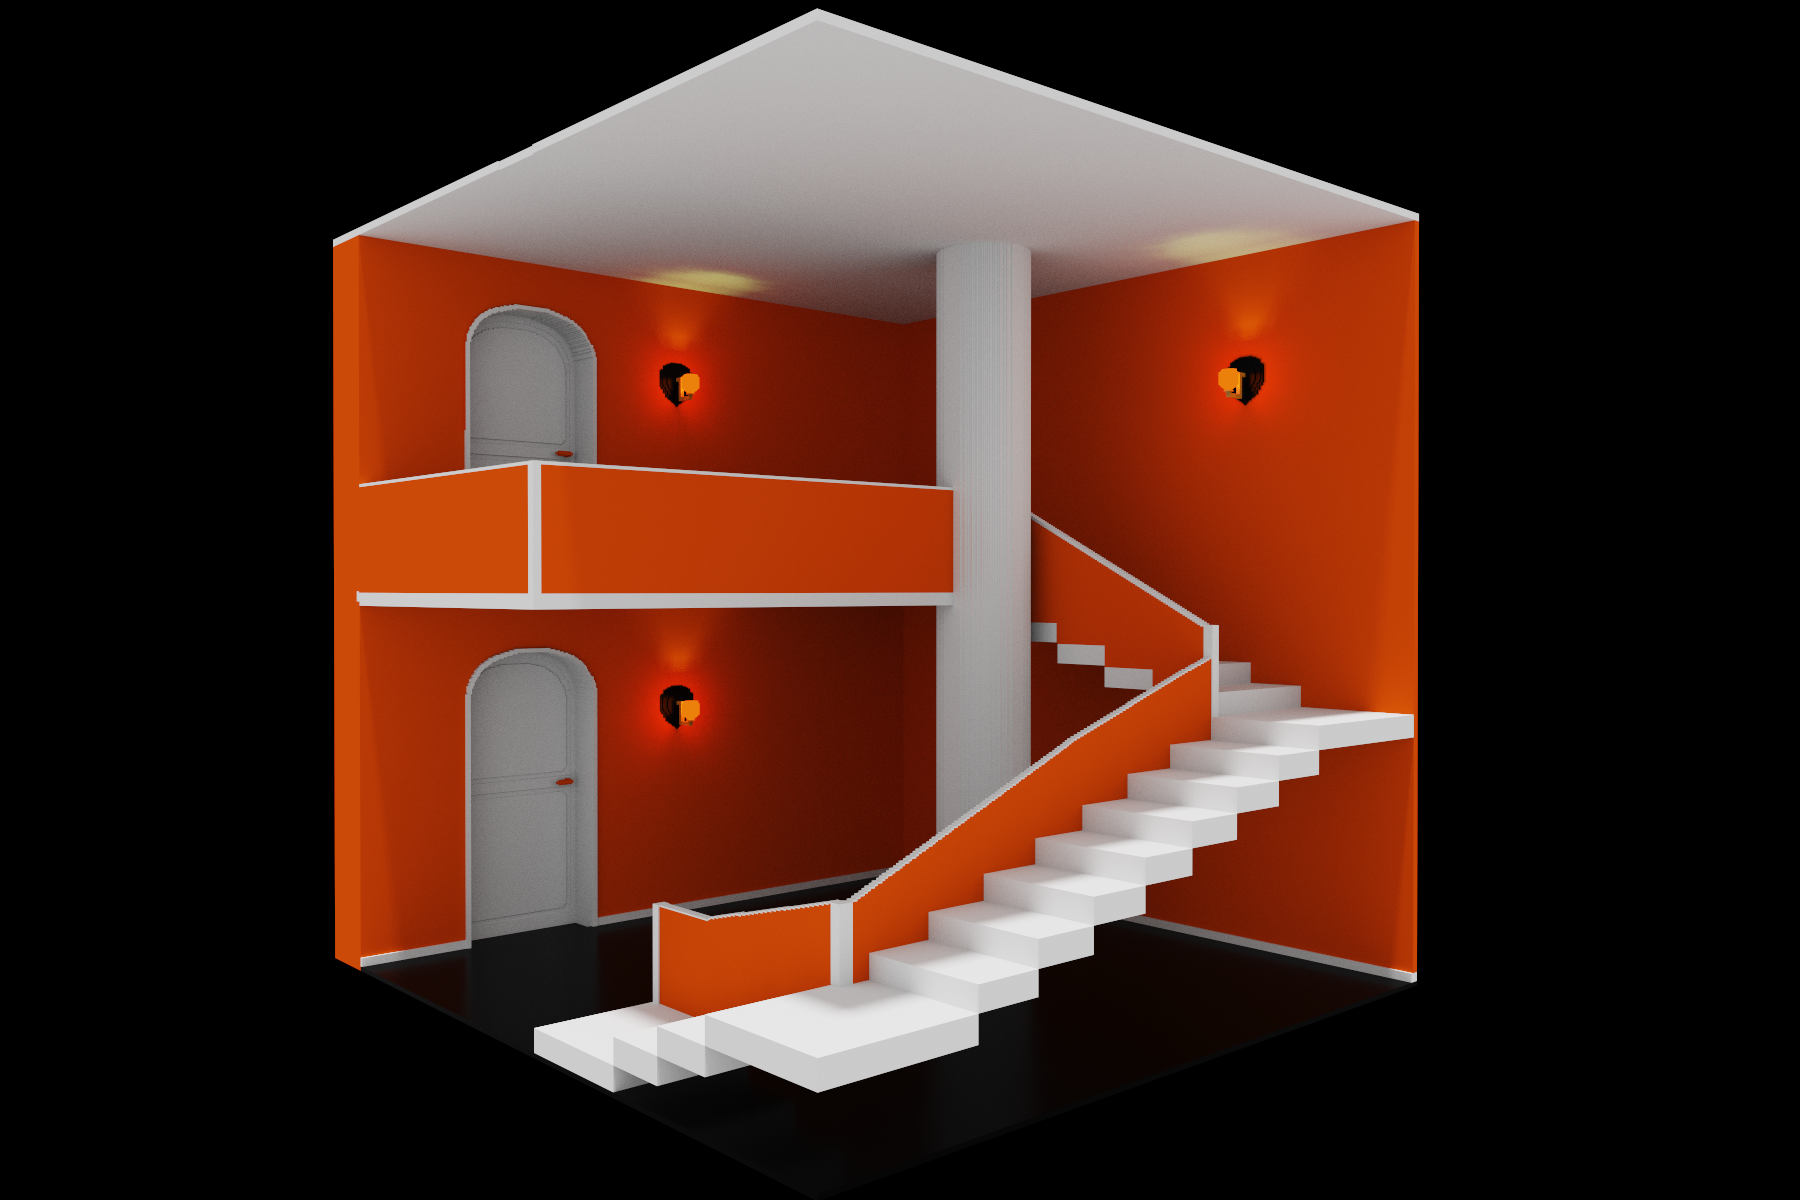 Room Architecture Orange White Black MagicaVoxel Voxels Lights Simple Background Digital Art 1800x1200